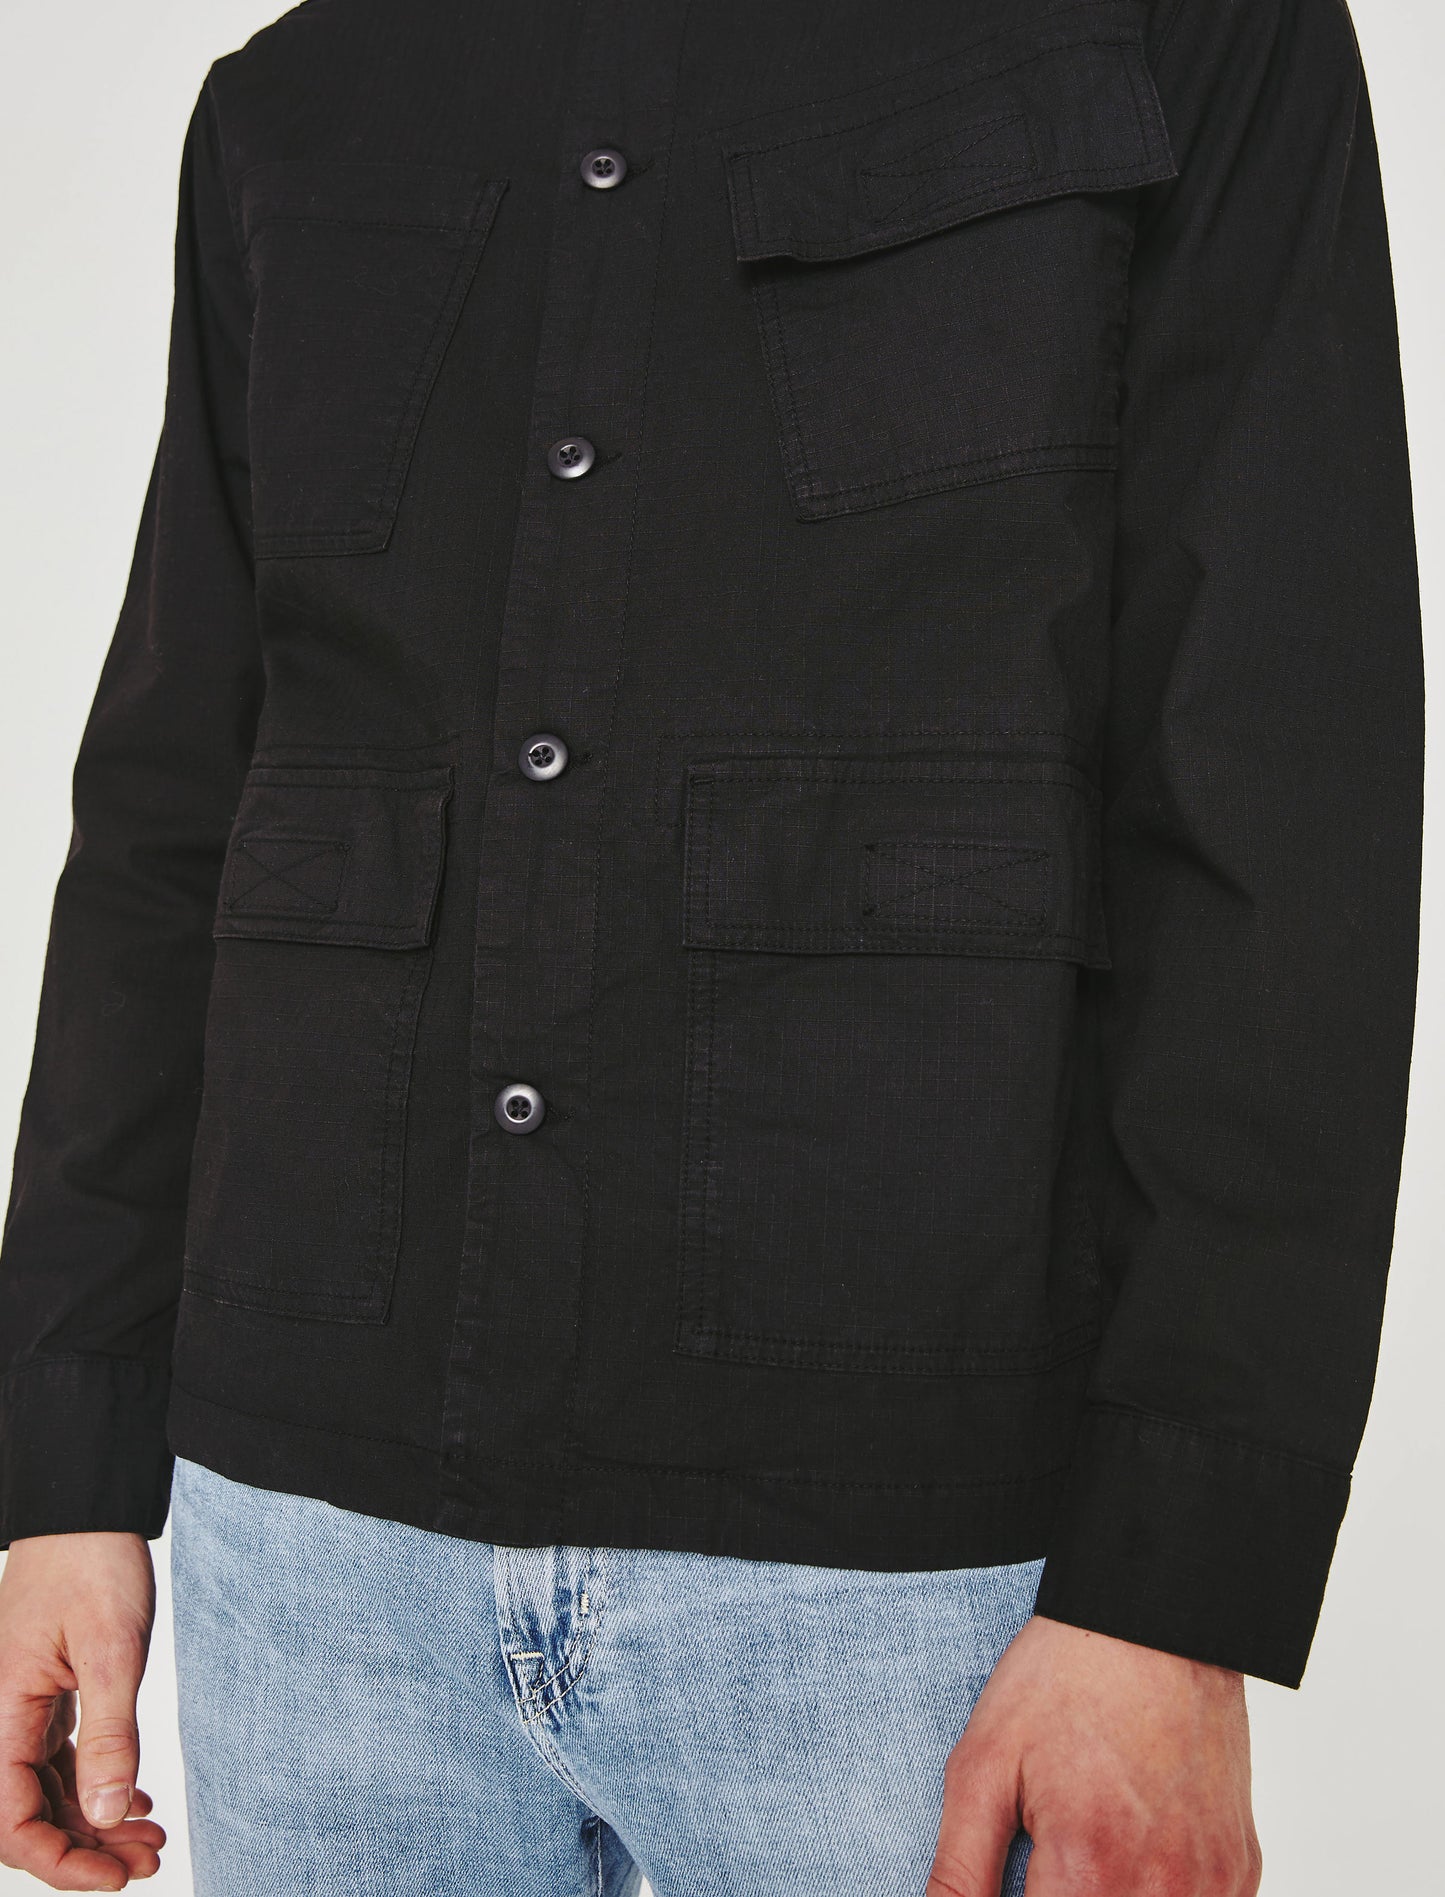 Lance Fatigue Pure Black Shirt Jacket Men Top Photo 3